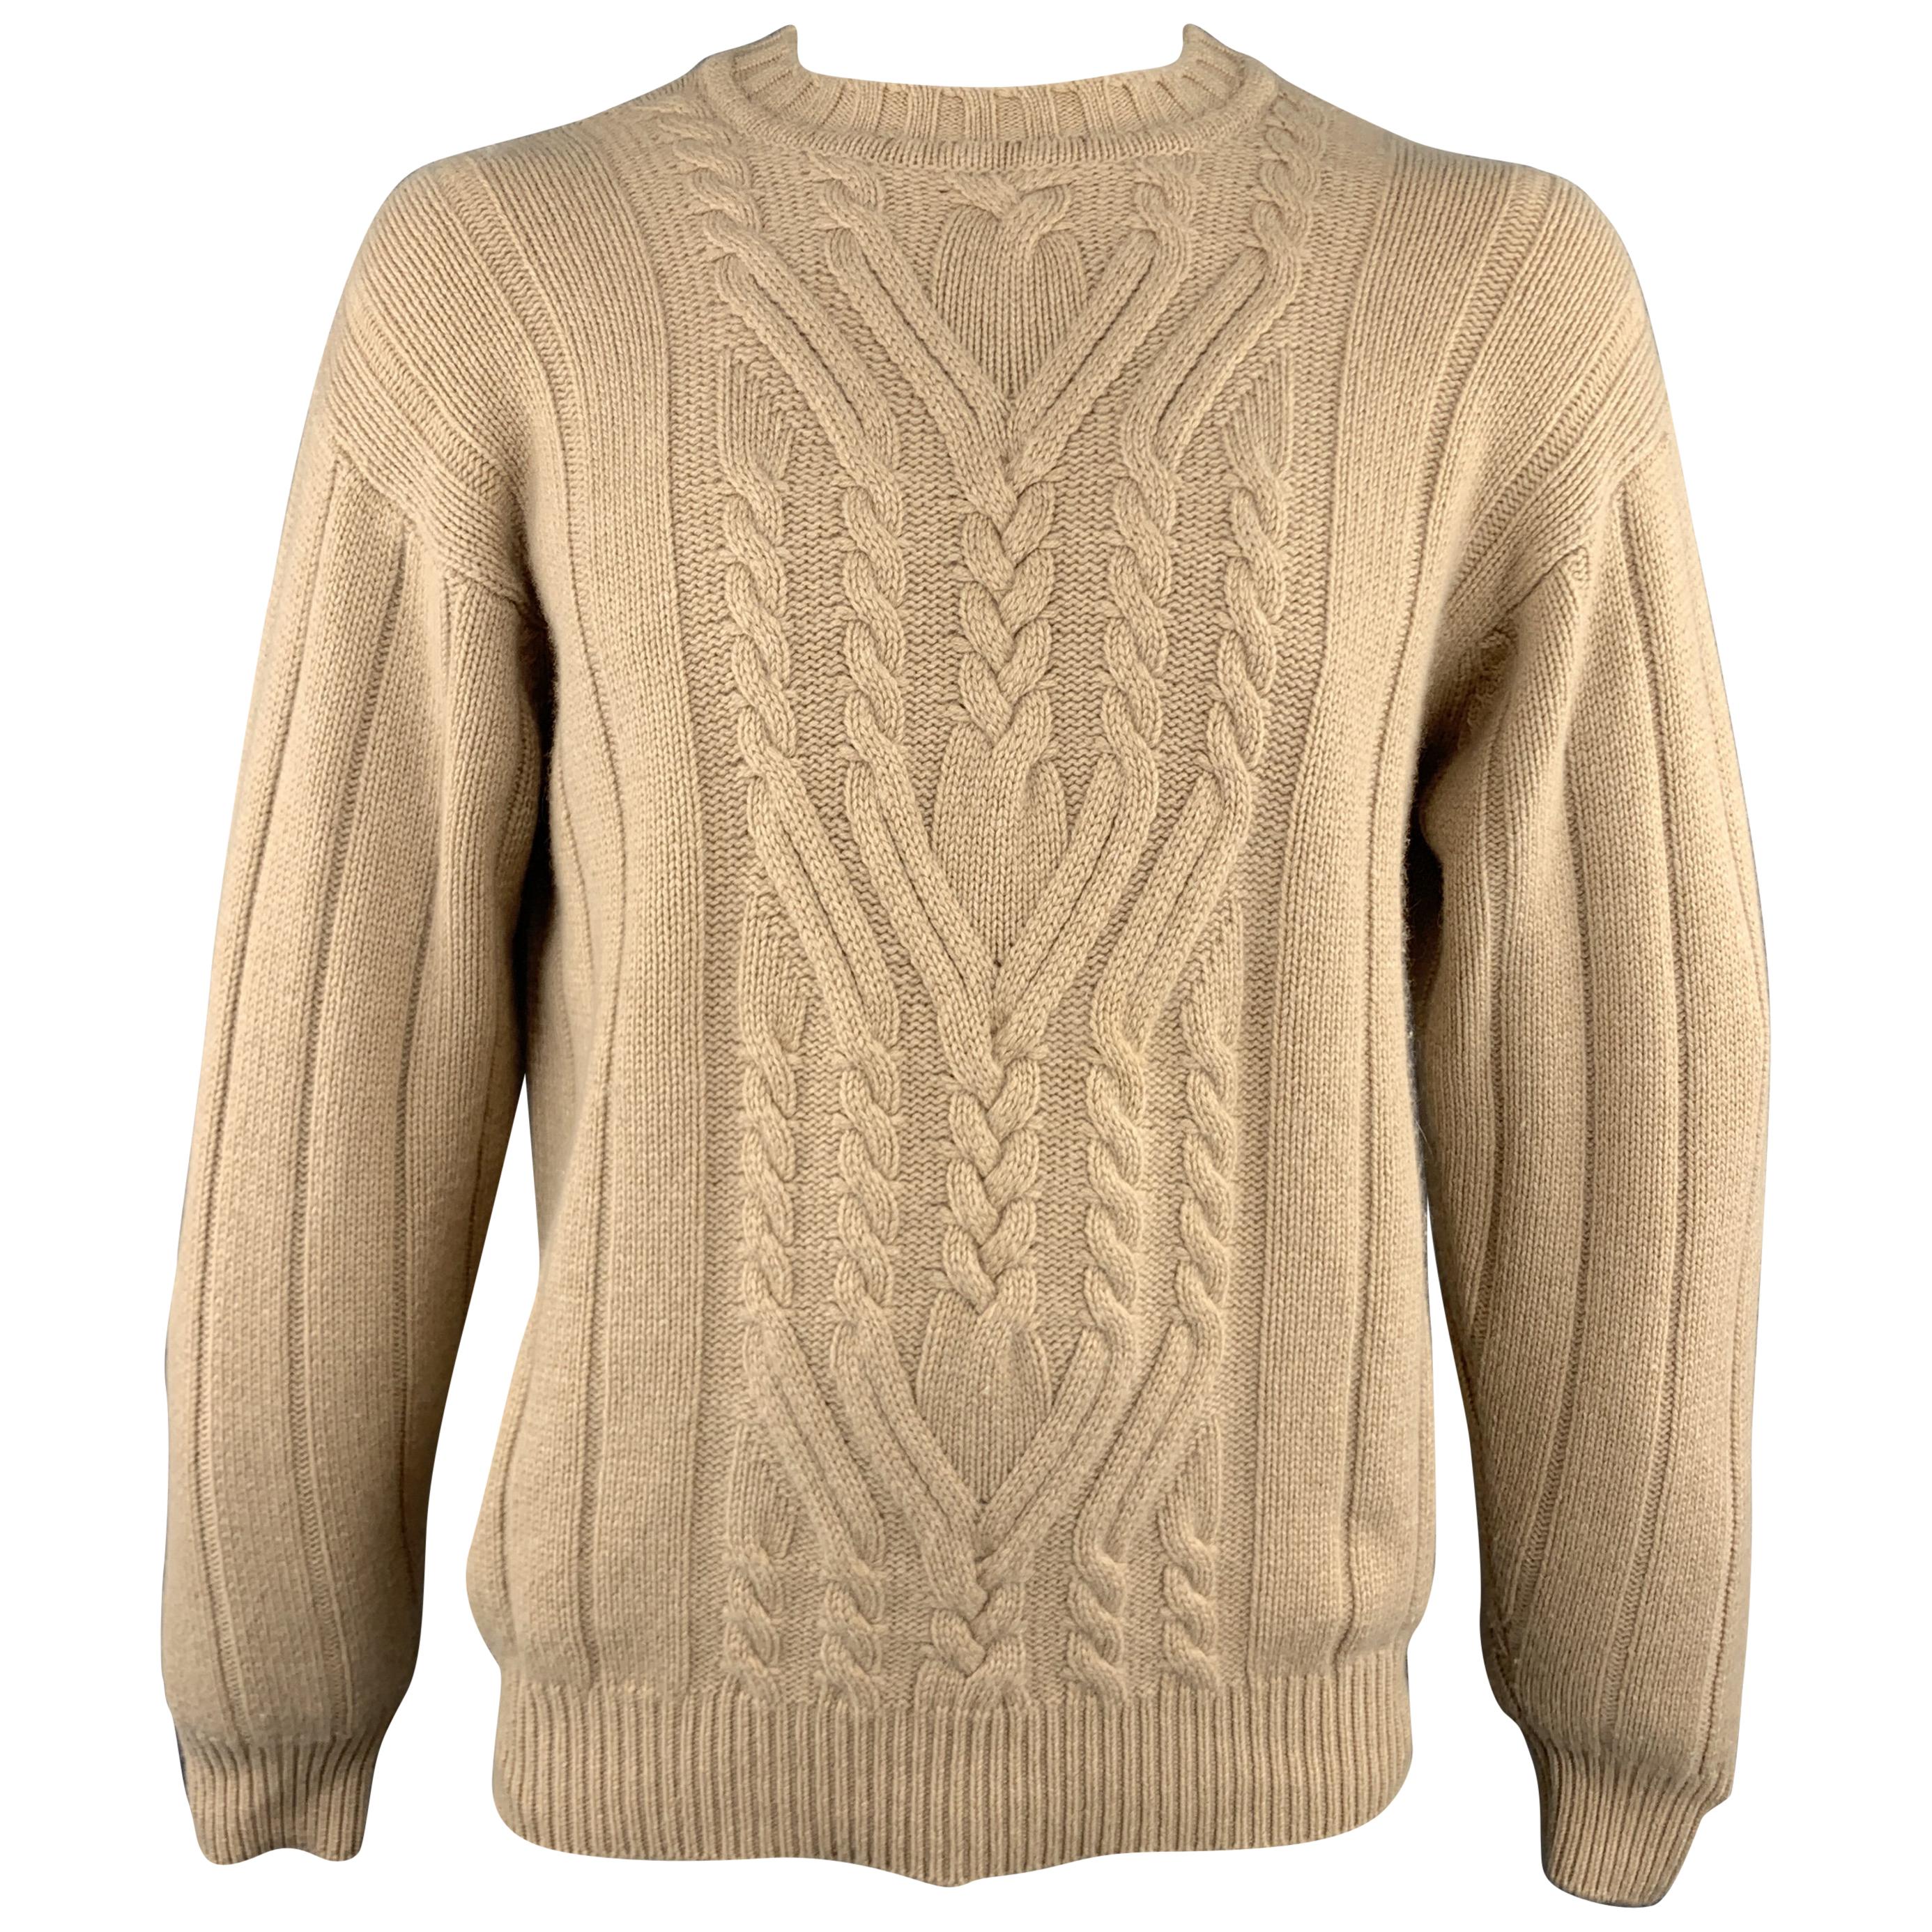 MANRICO Size L Tan Cable Cashmere Crew-Neck Sweater